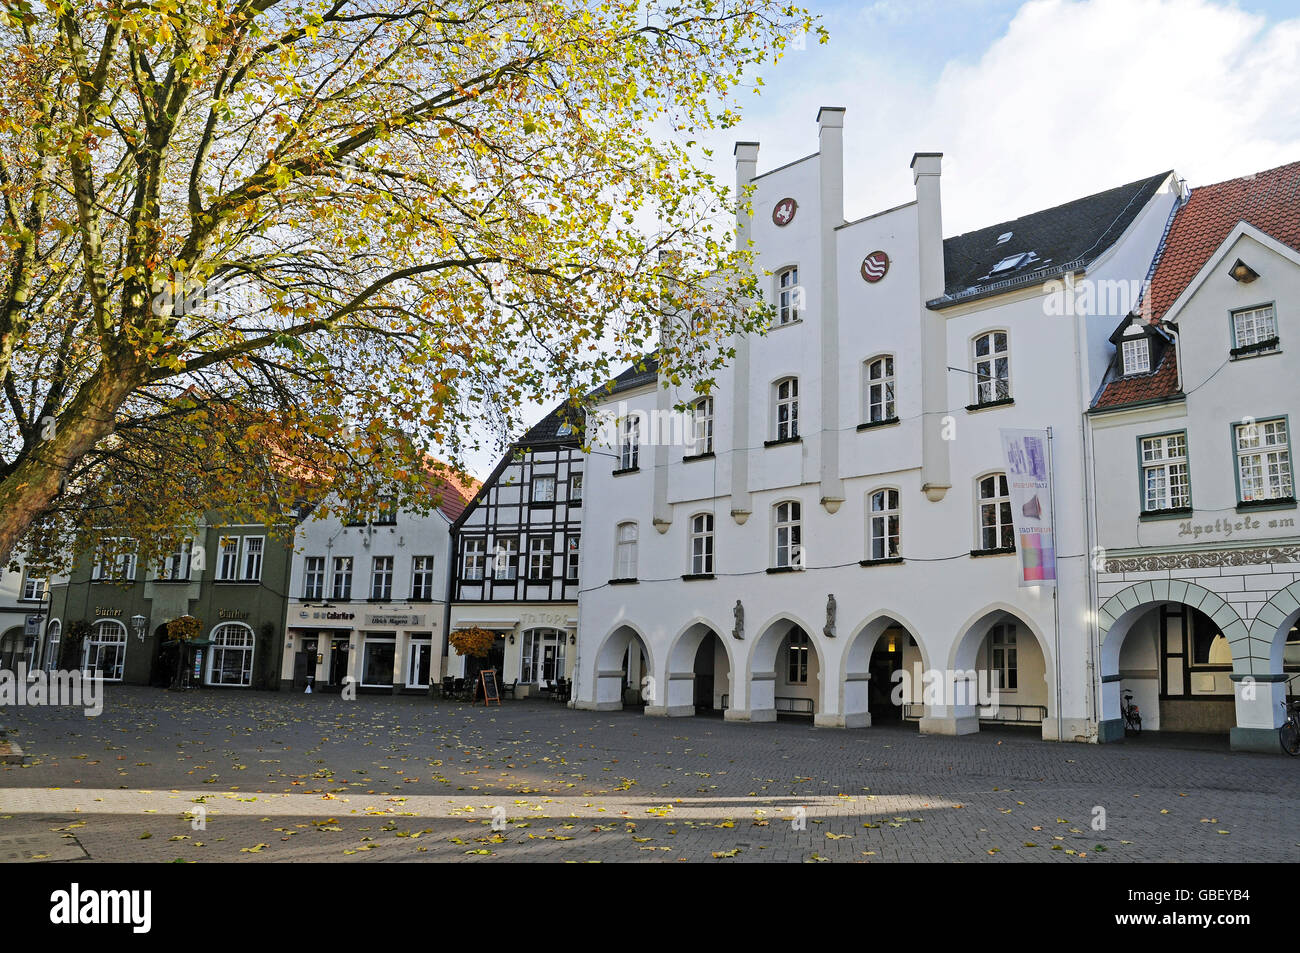 Municipal museum, market square, Beckum, Munsterland region, North Rhine-Westphalia, Germany / Münsterland Stock Photo